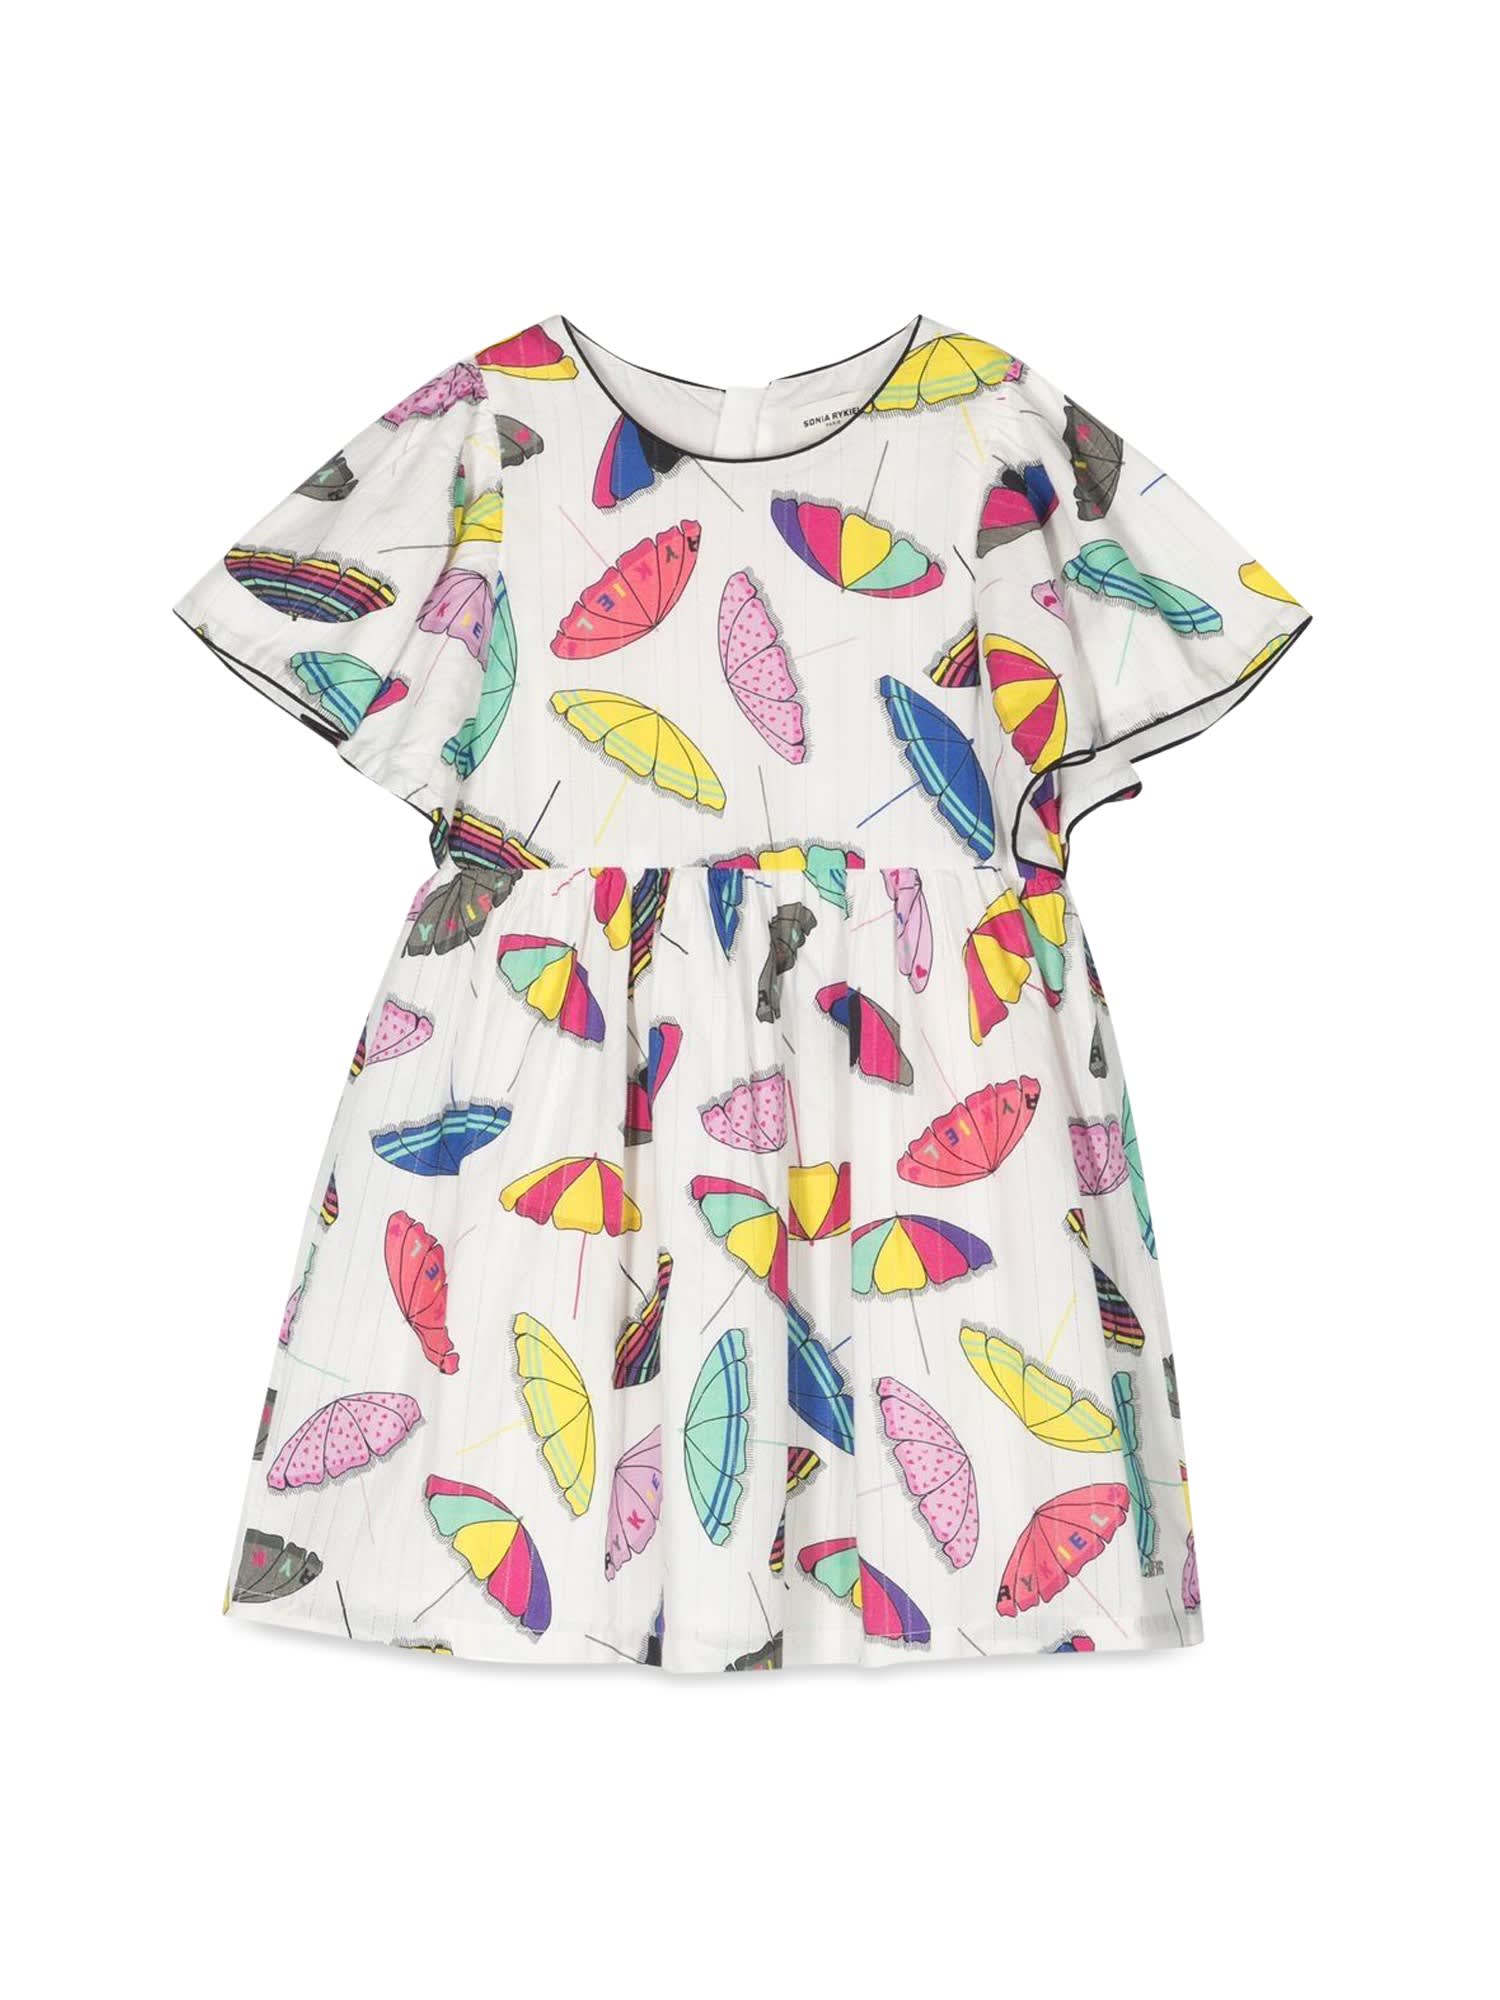 Sonia Rykiel Kids' Umbrellas Patterned Dress In Multicolor